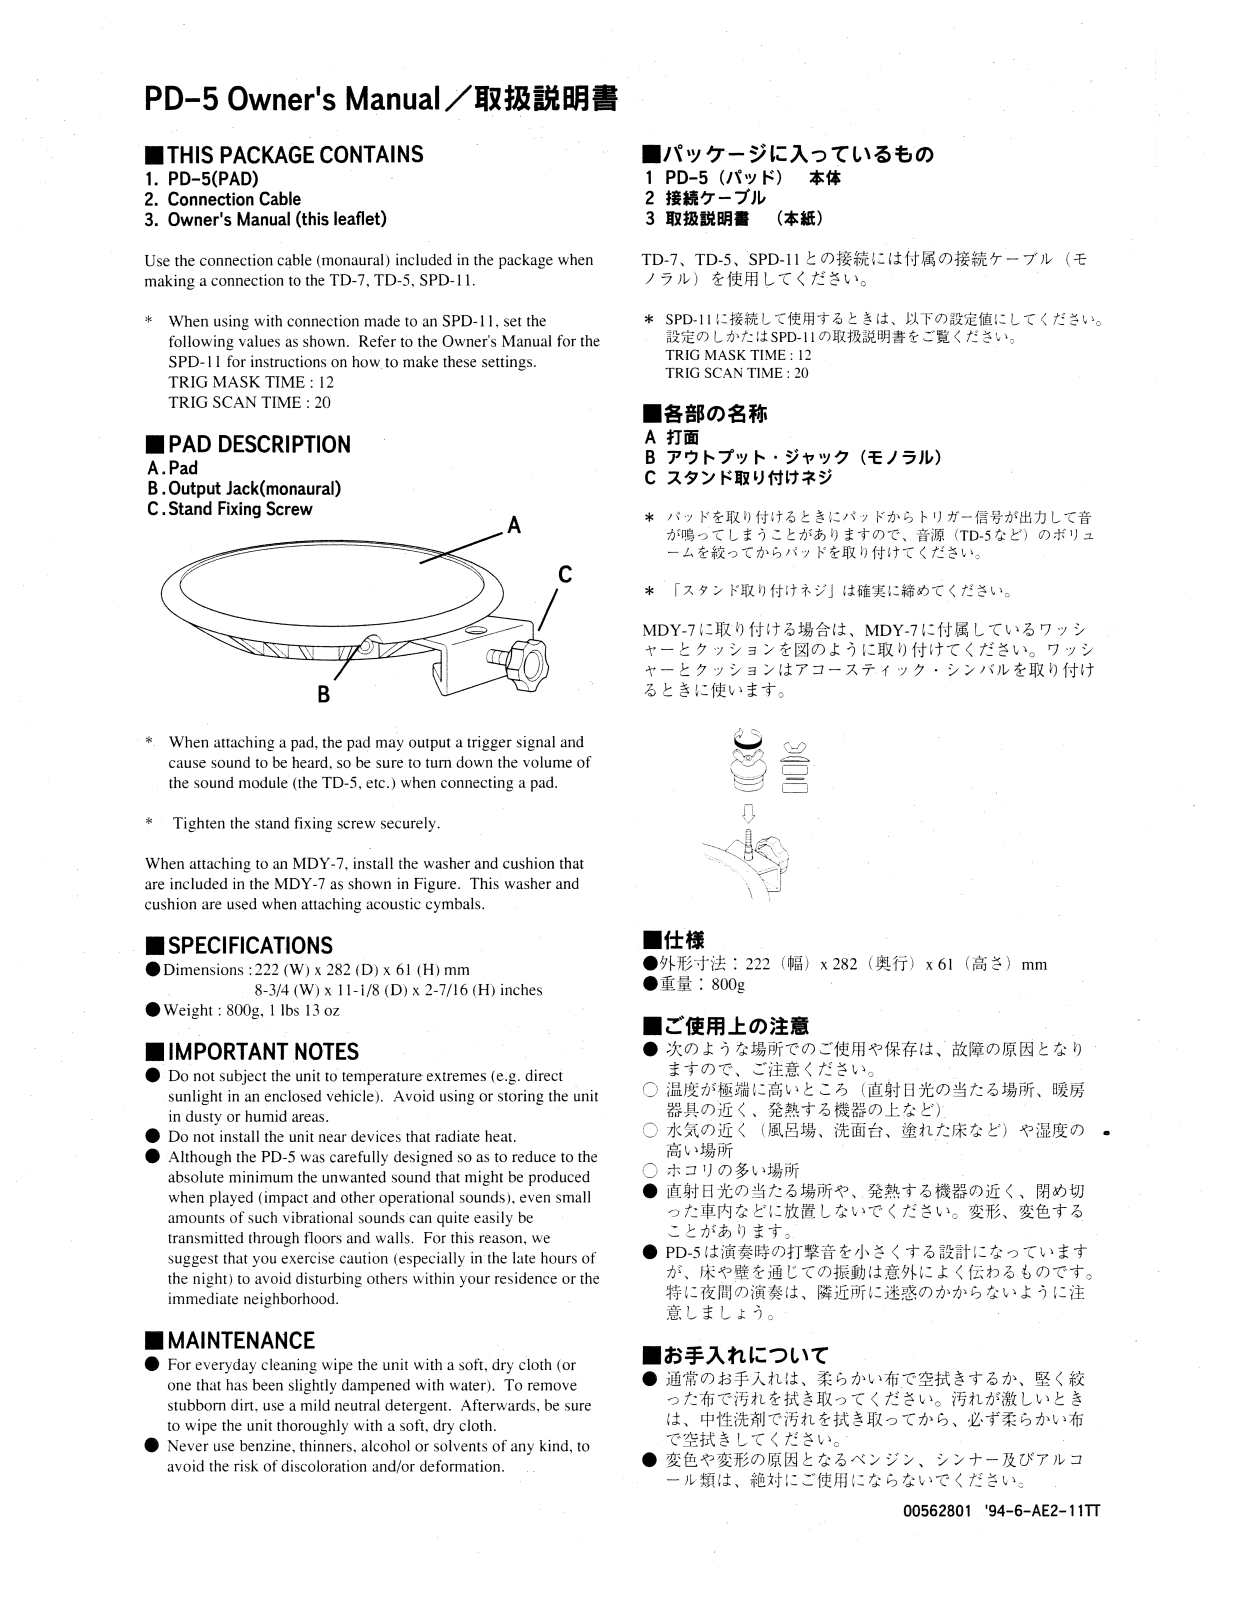 Roland PD 5 Service Manual